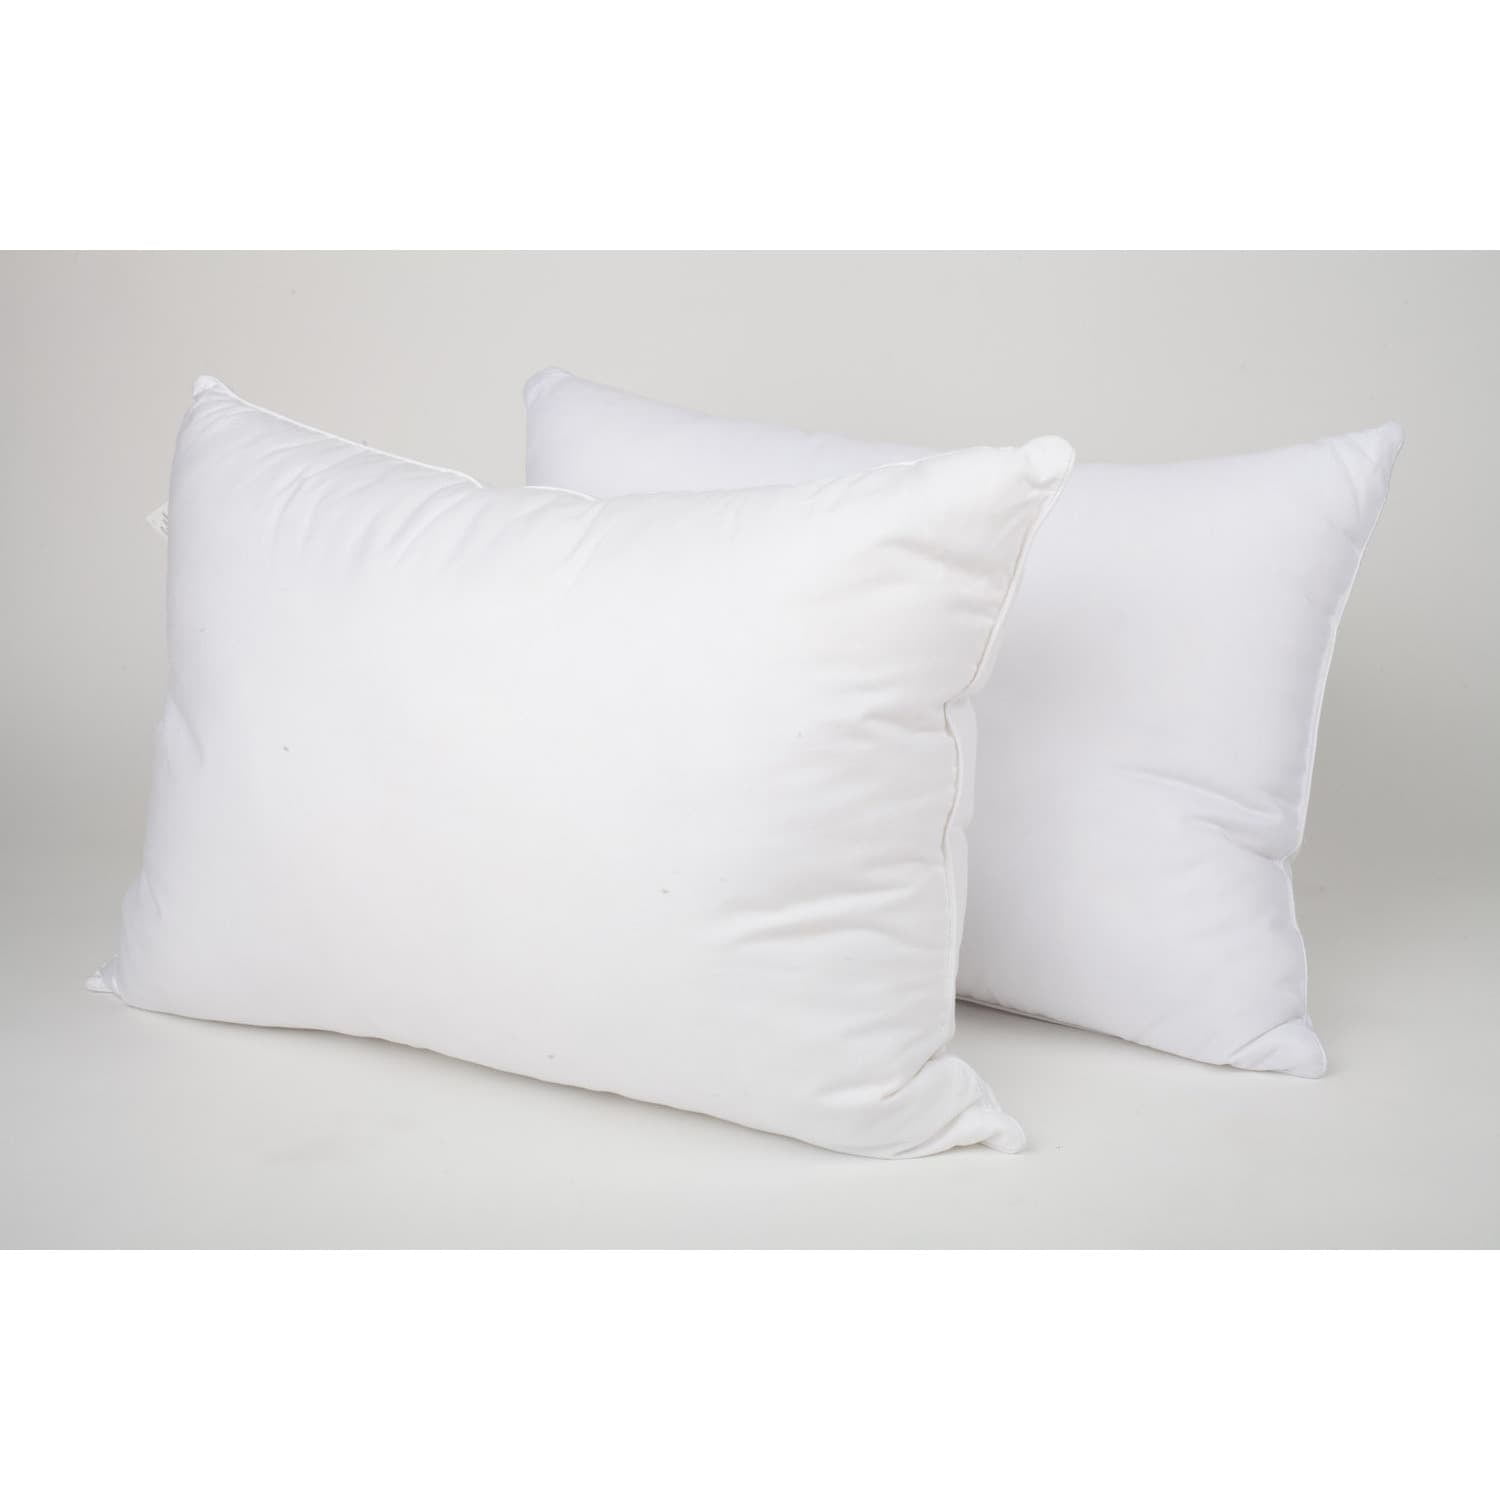 Iso-Pedic 2-pk Stay Cool Performance Pillow Set Jumbo White 